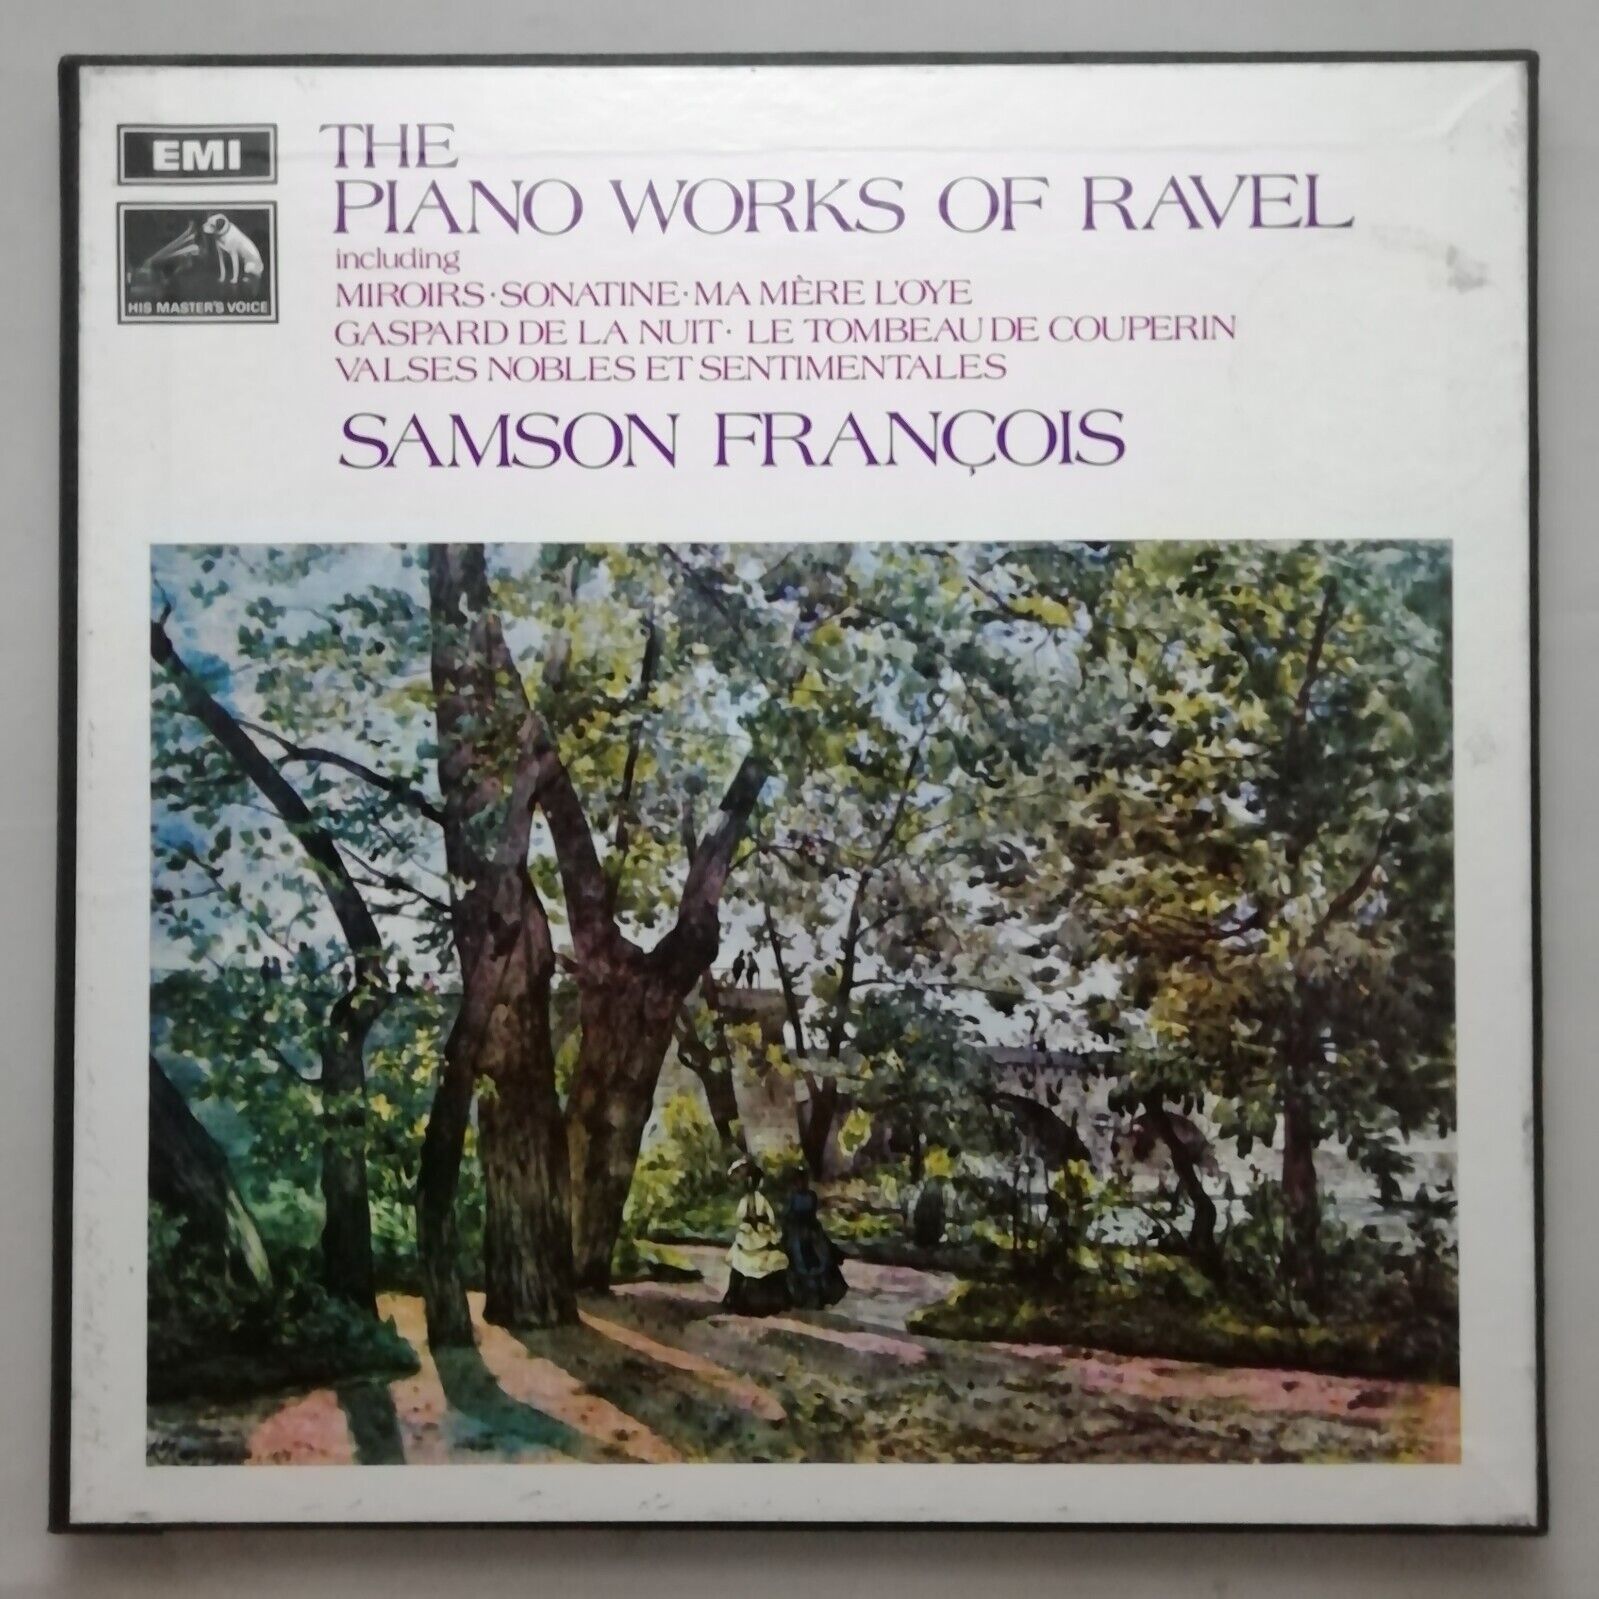 EMI 3 LP box SLS 783/3: The Piano Works of Ravel / Samson François